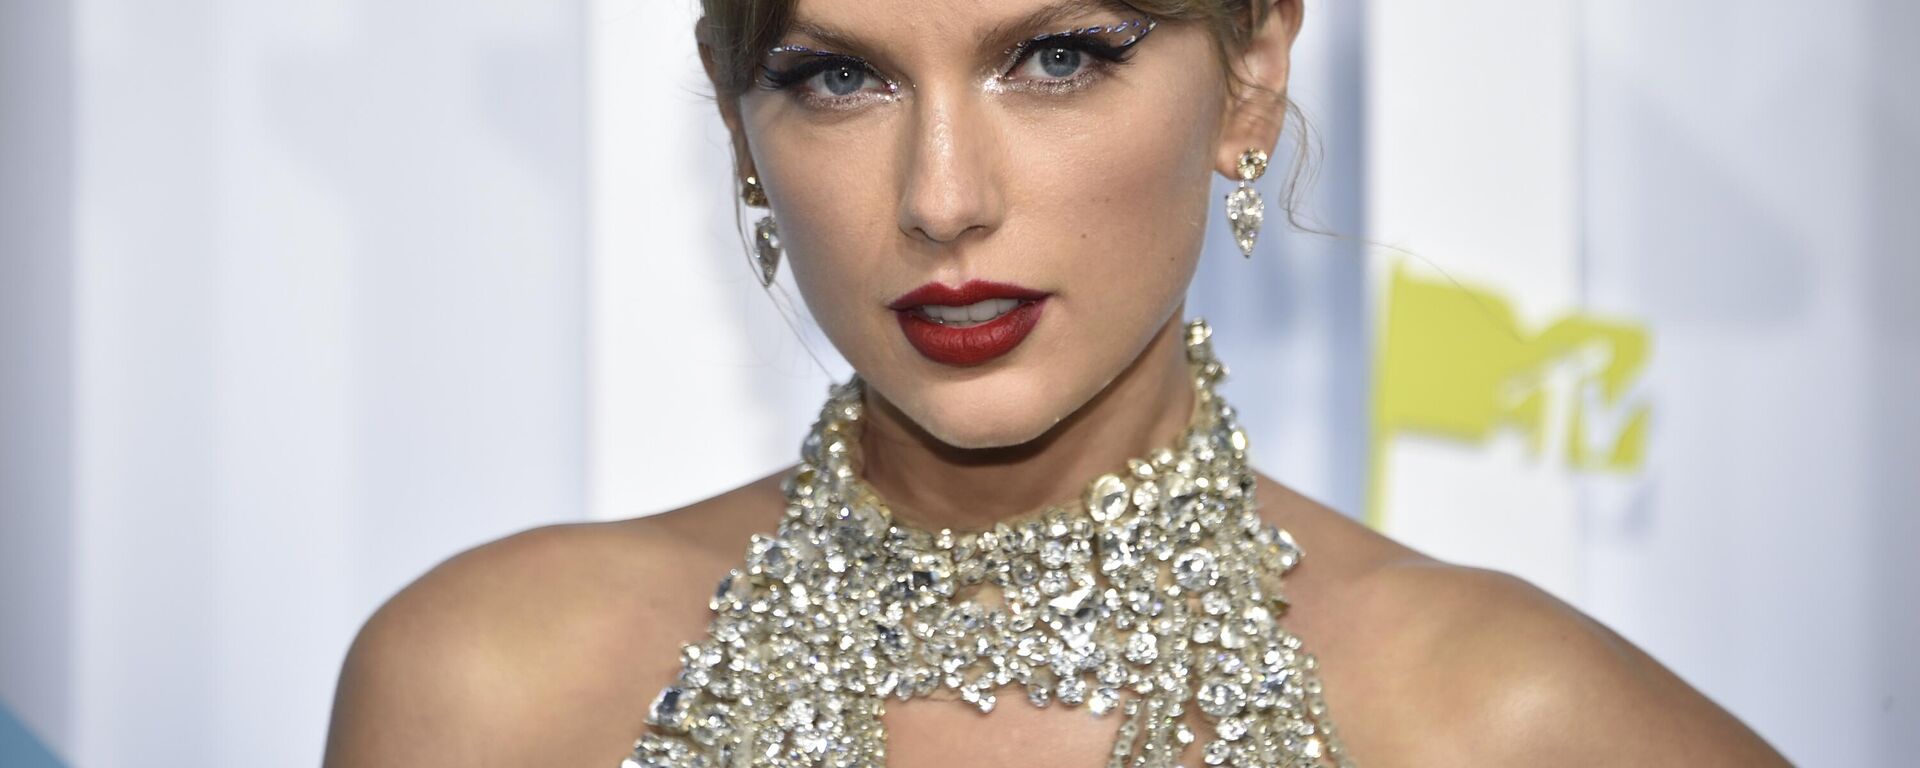 Taylor Swift arrives at the MTV Video Music Awards at the Prudential Center on Sunday, Aug. 28, 2022, in Newark, N.J. - Sputnik International, 1920, 29.12.2022